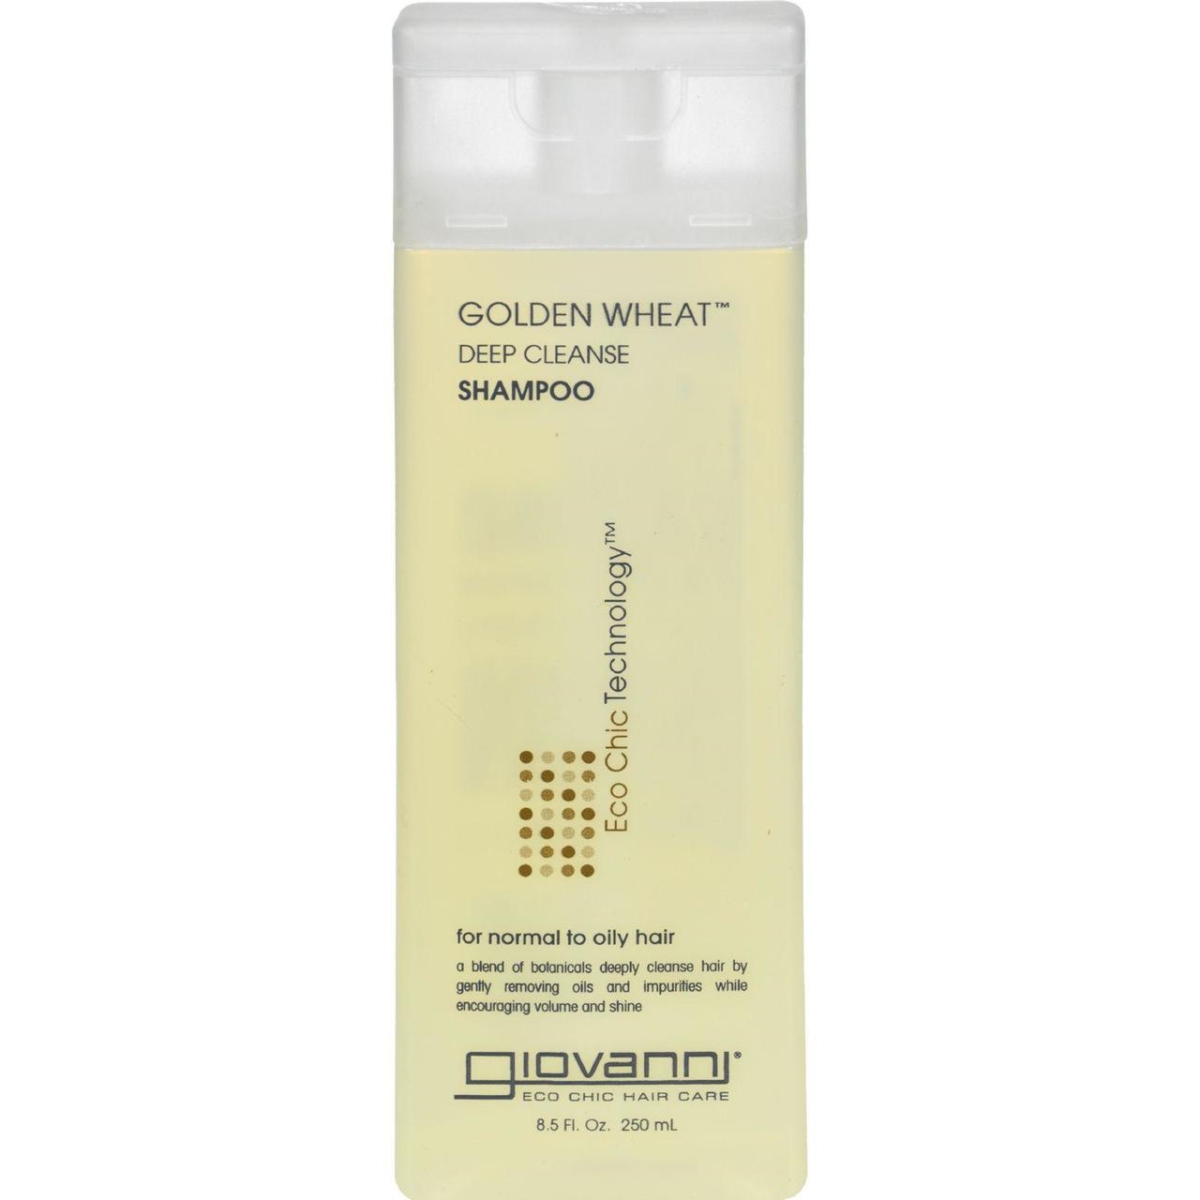 Hg0628123 8.5 Fl Oz Deep Cleanse Shampoo Golden Wheat